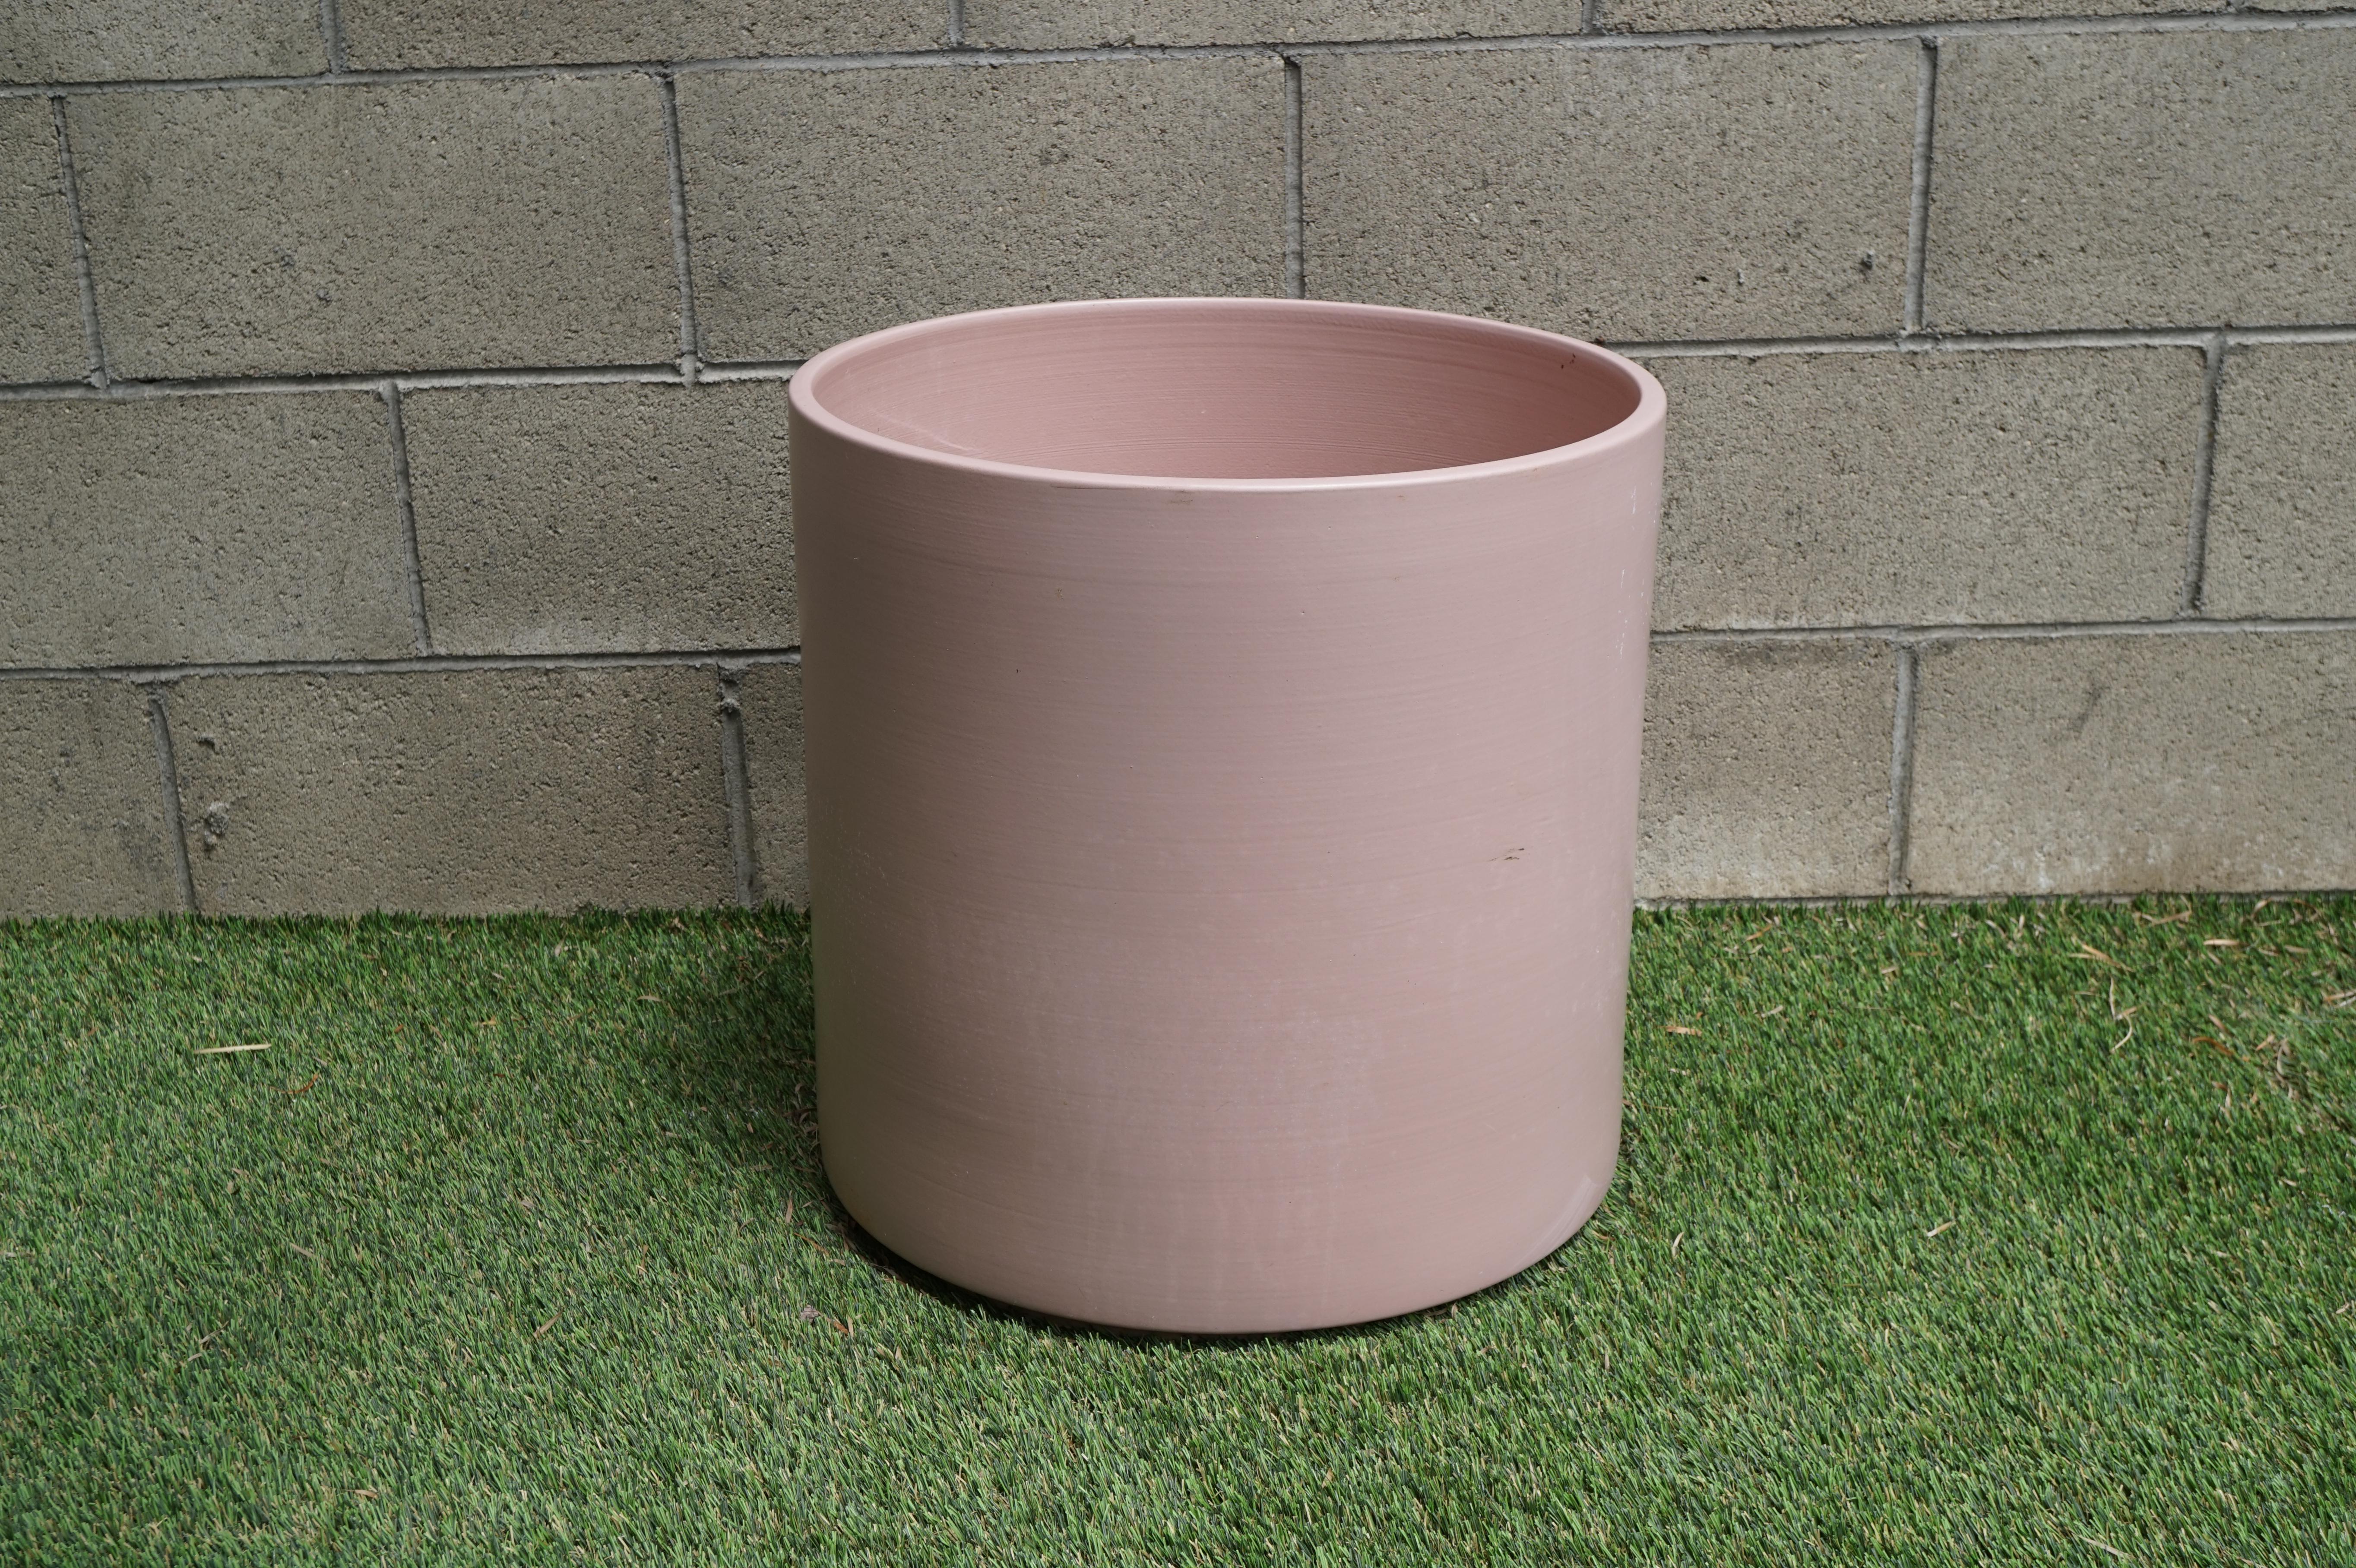 Vintage MCM large light pink ceramic planter pot by Gainey

Measures 18